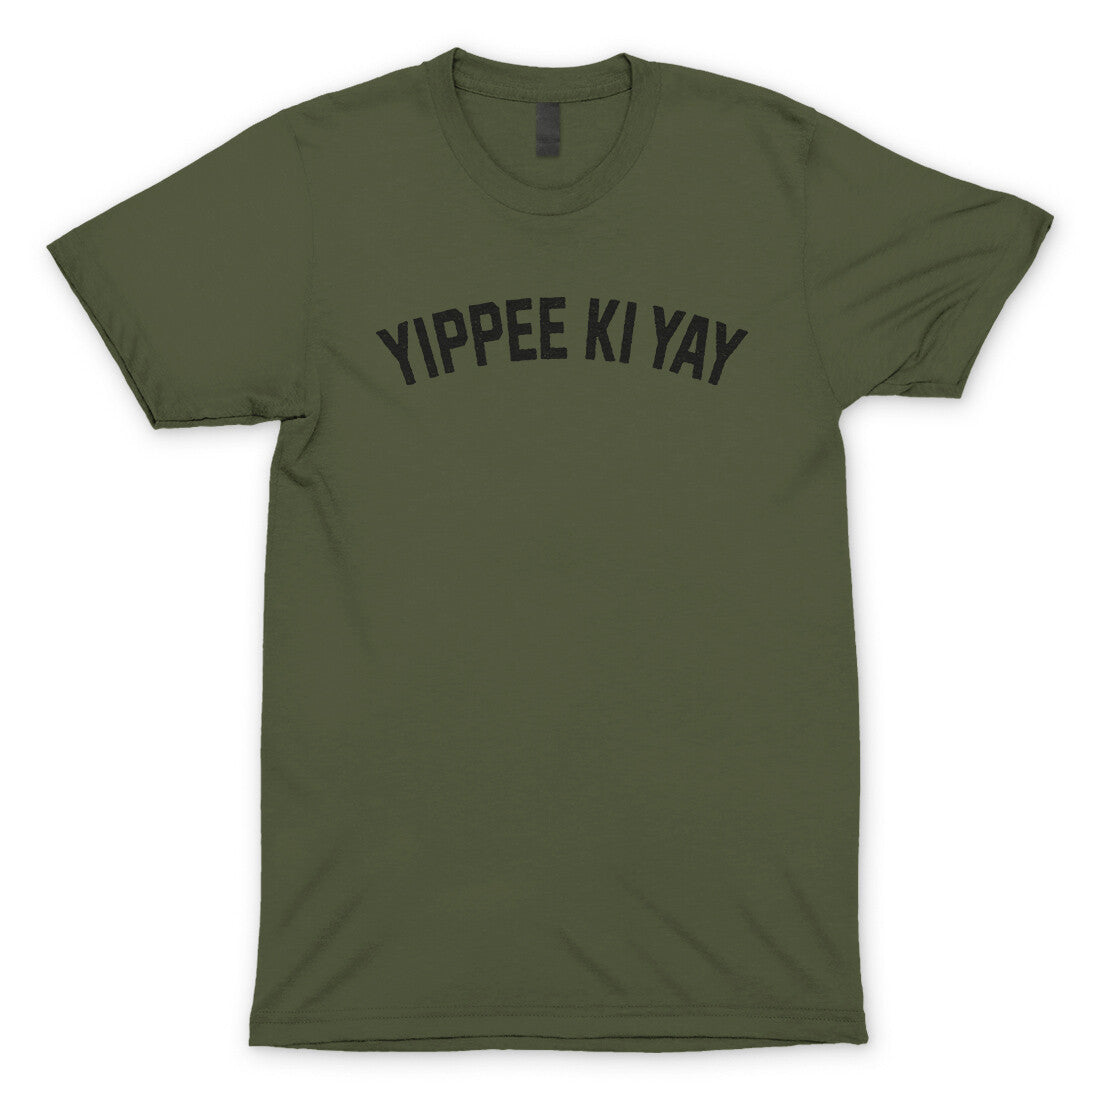 Yippee Ki Yay in Military Green Color